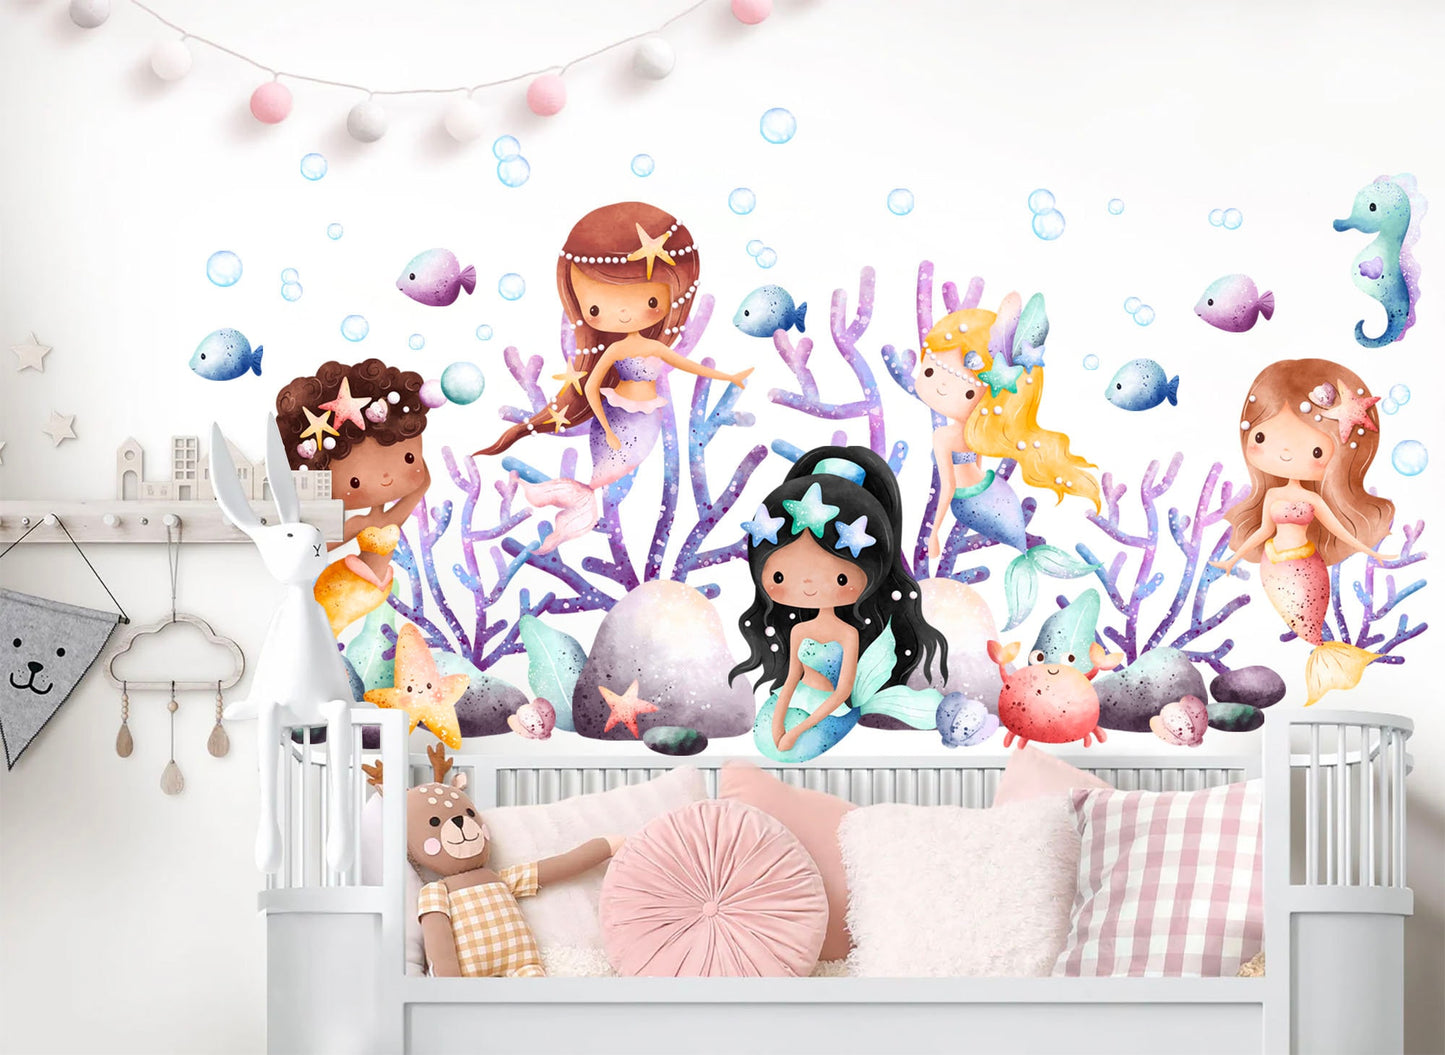 Enchanting Underwater Mermaid World Wall Decal for Girls' Room - BR384